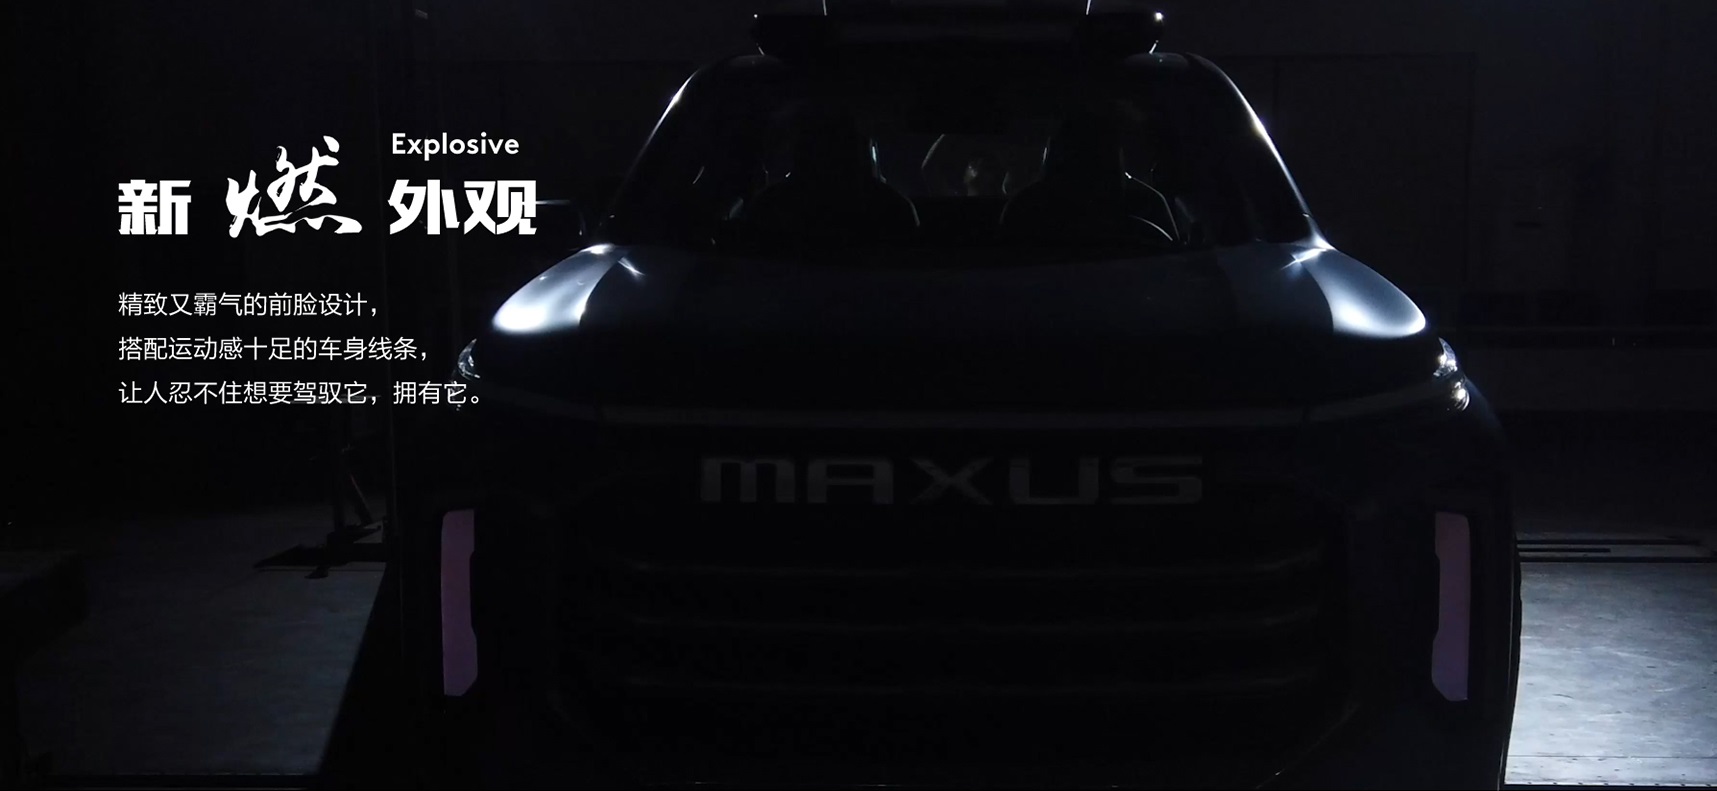 Maxus T80 / MG Extender EV กระบะไฟฟ้า CAR250 รถยนต์รถ